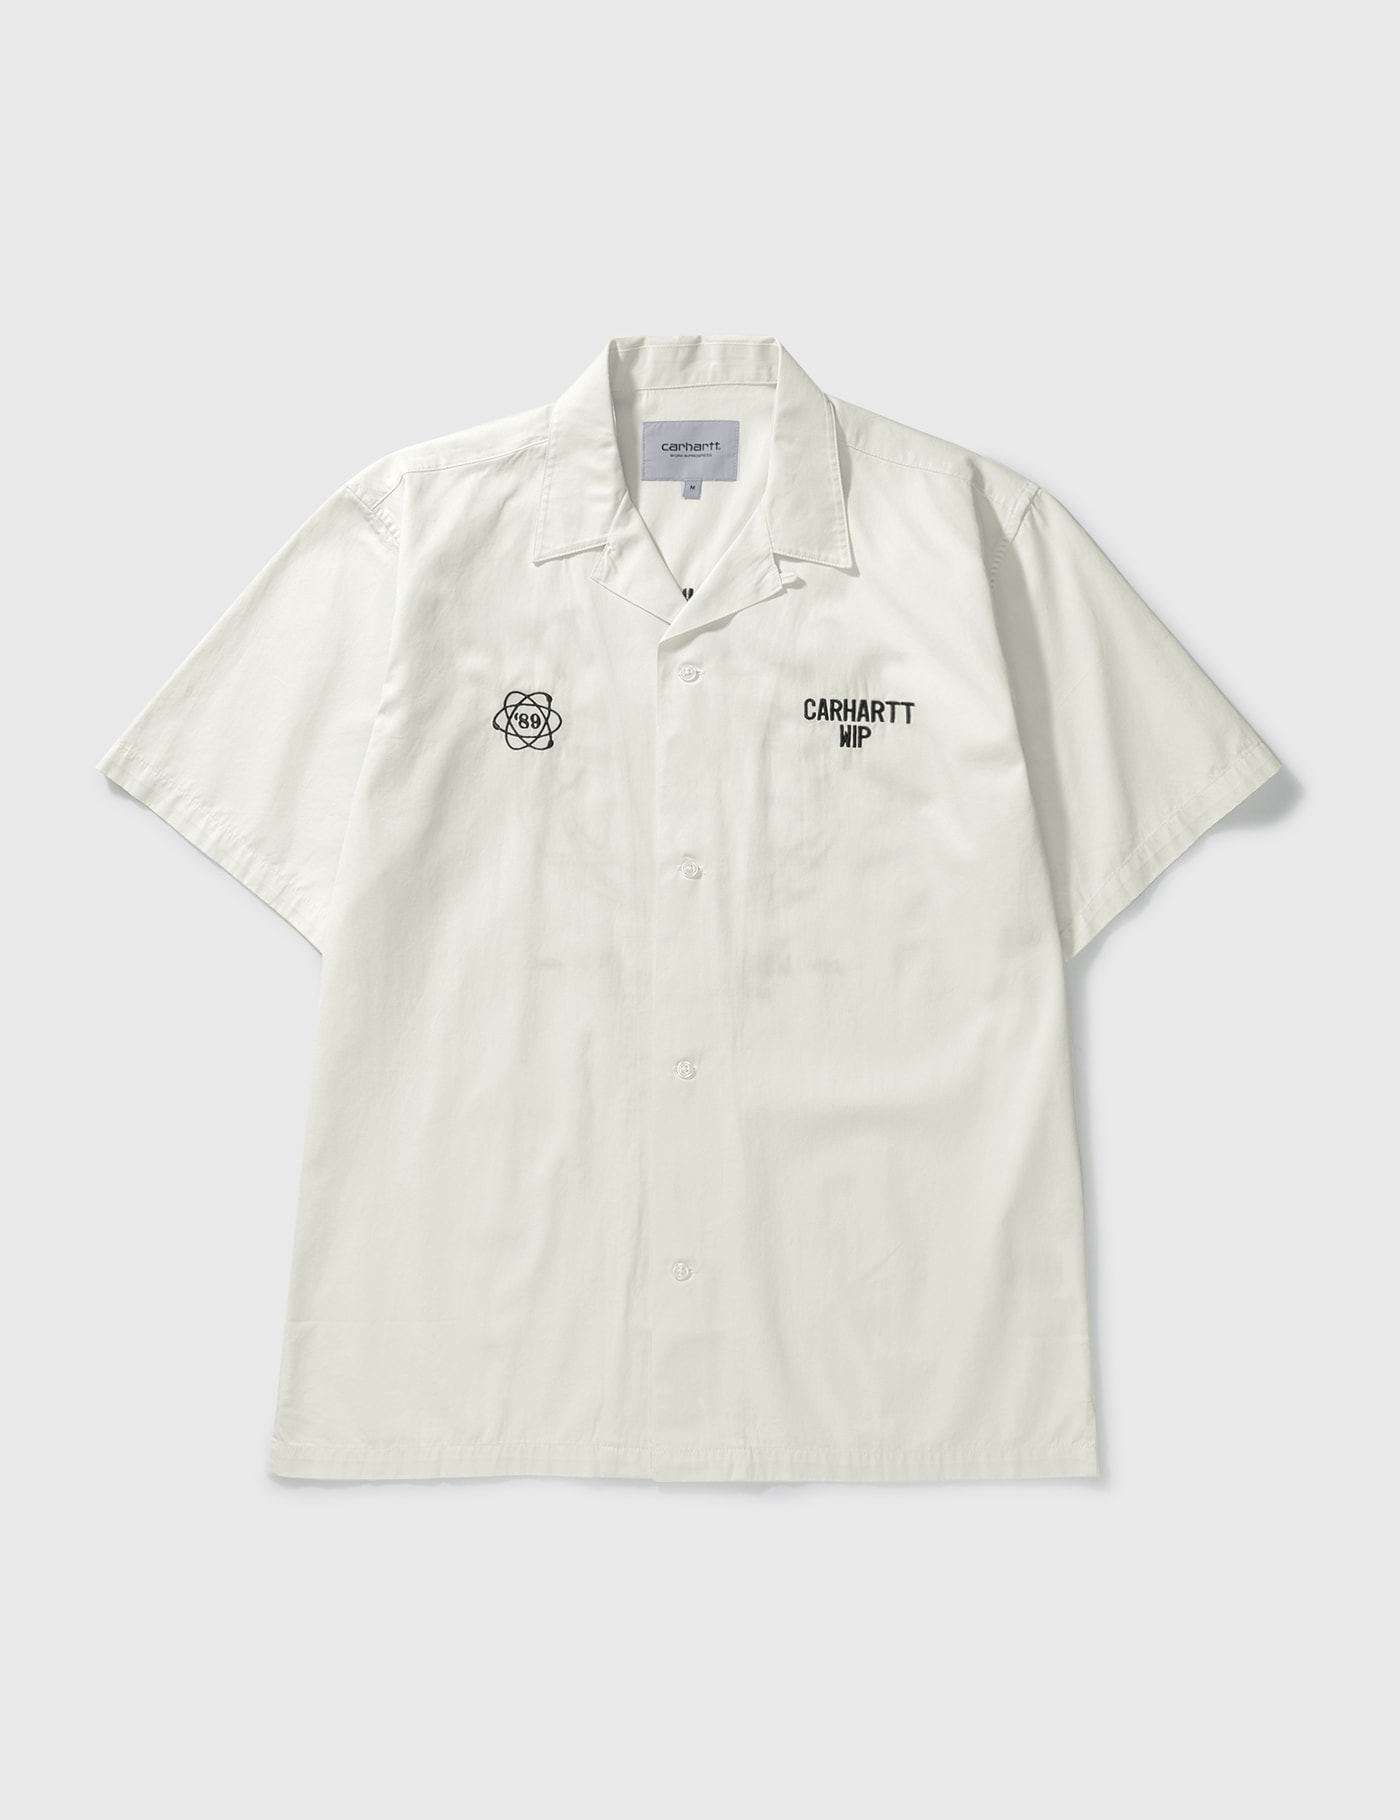 Carhartt Cartograph Shirt In White